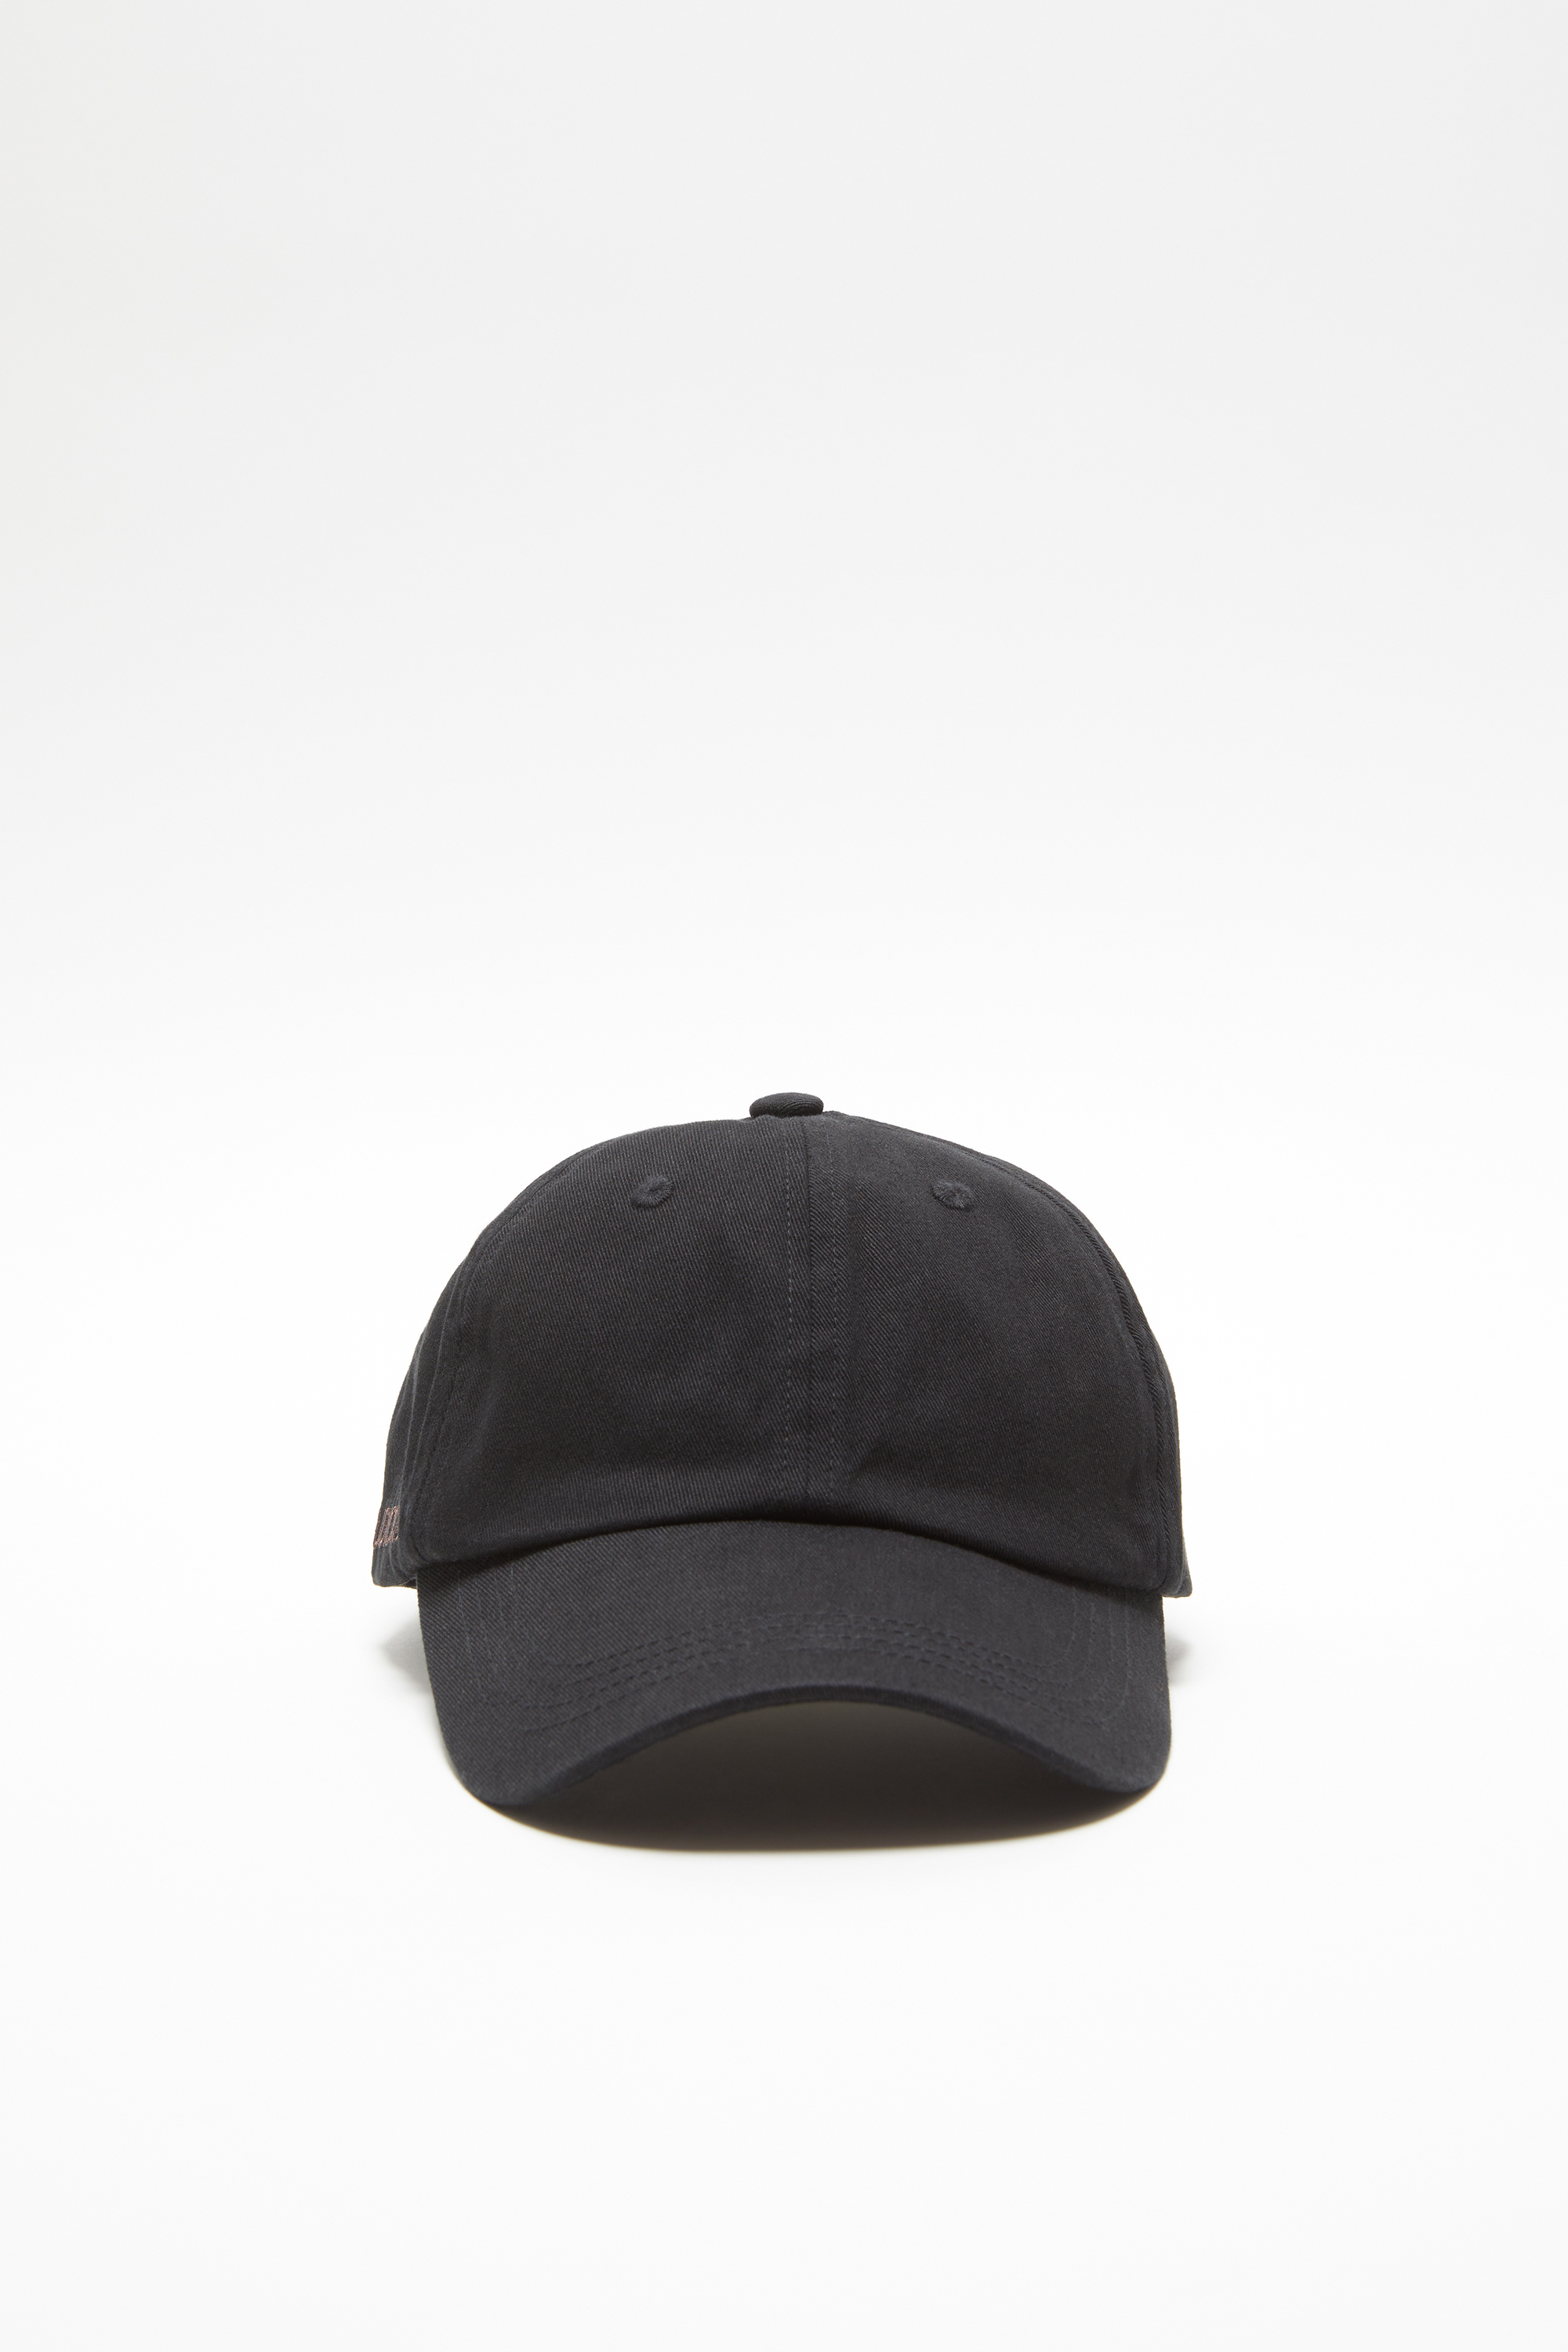 Acne Studios – Men's Hats